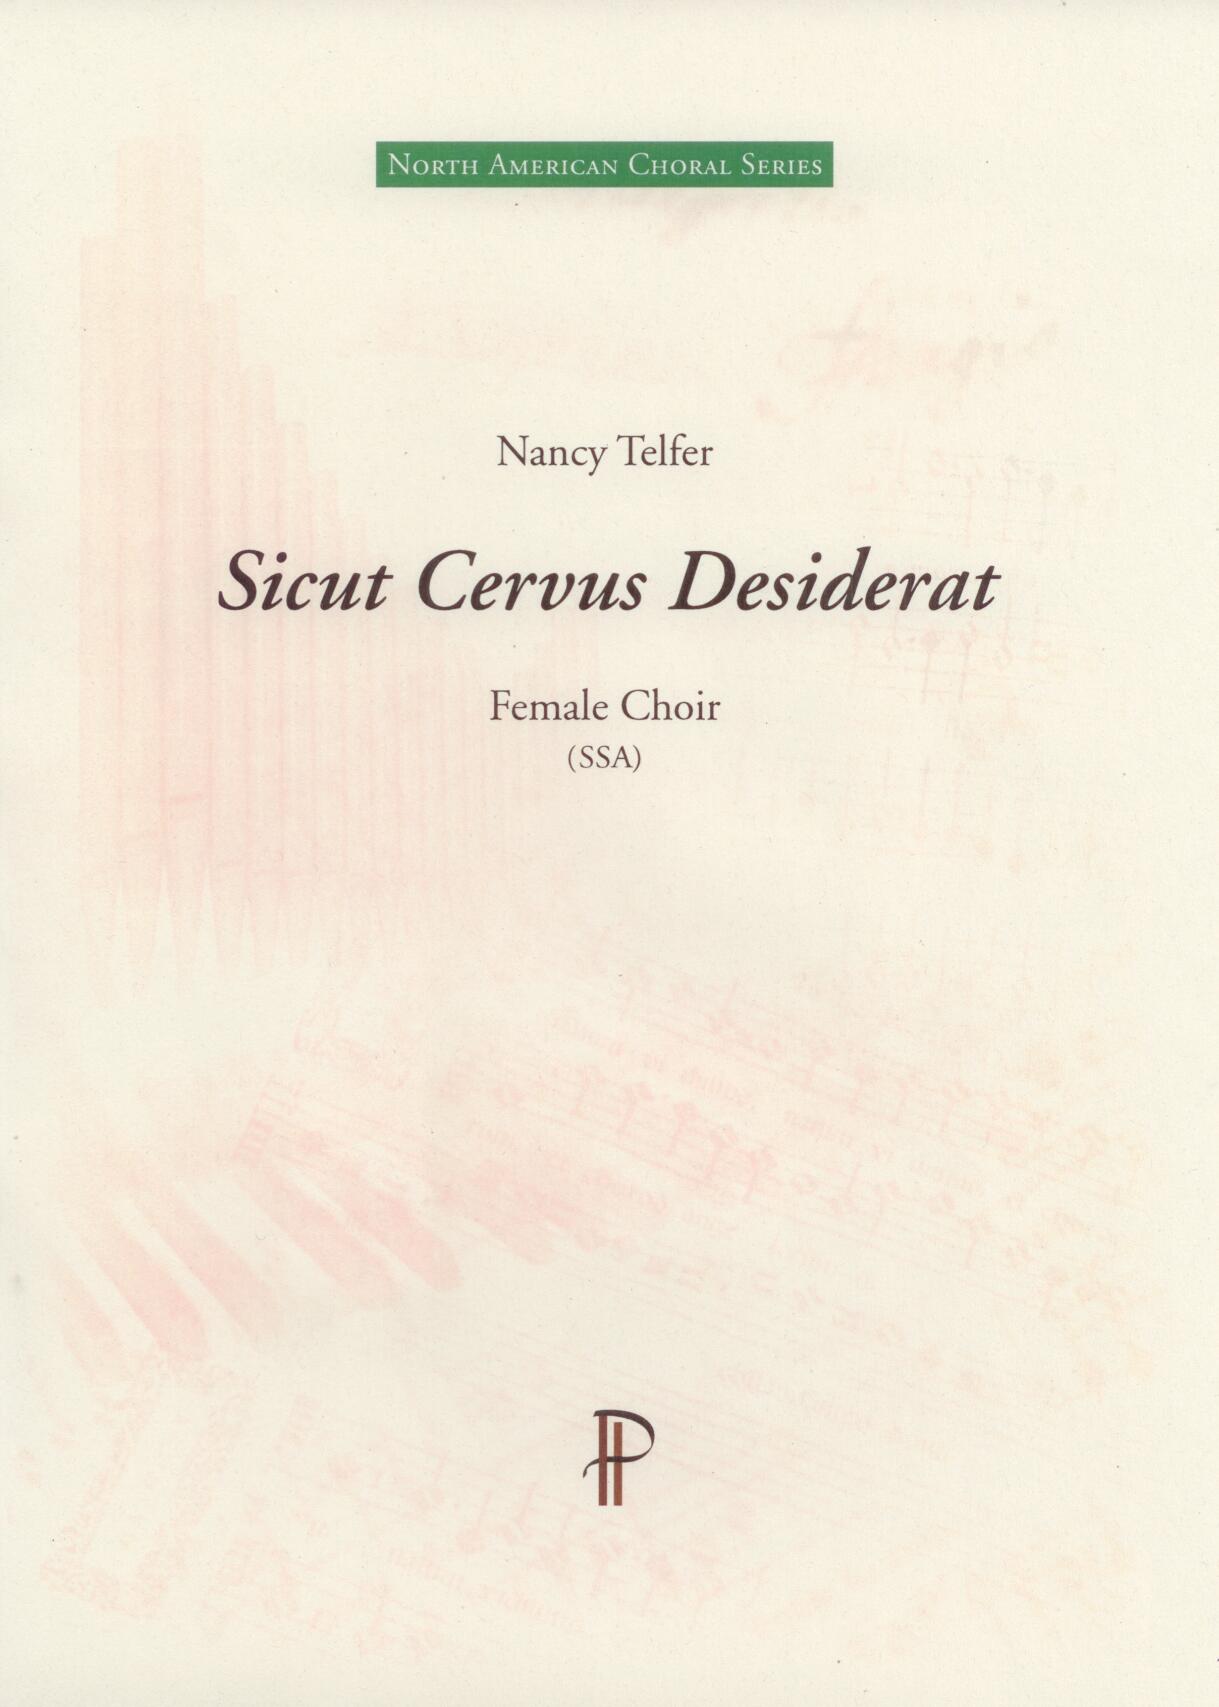 Sicut Cervus Desiderat - Show sample score